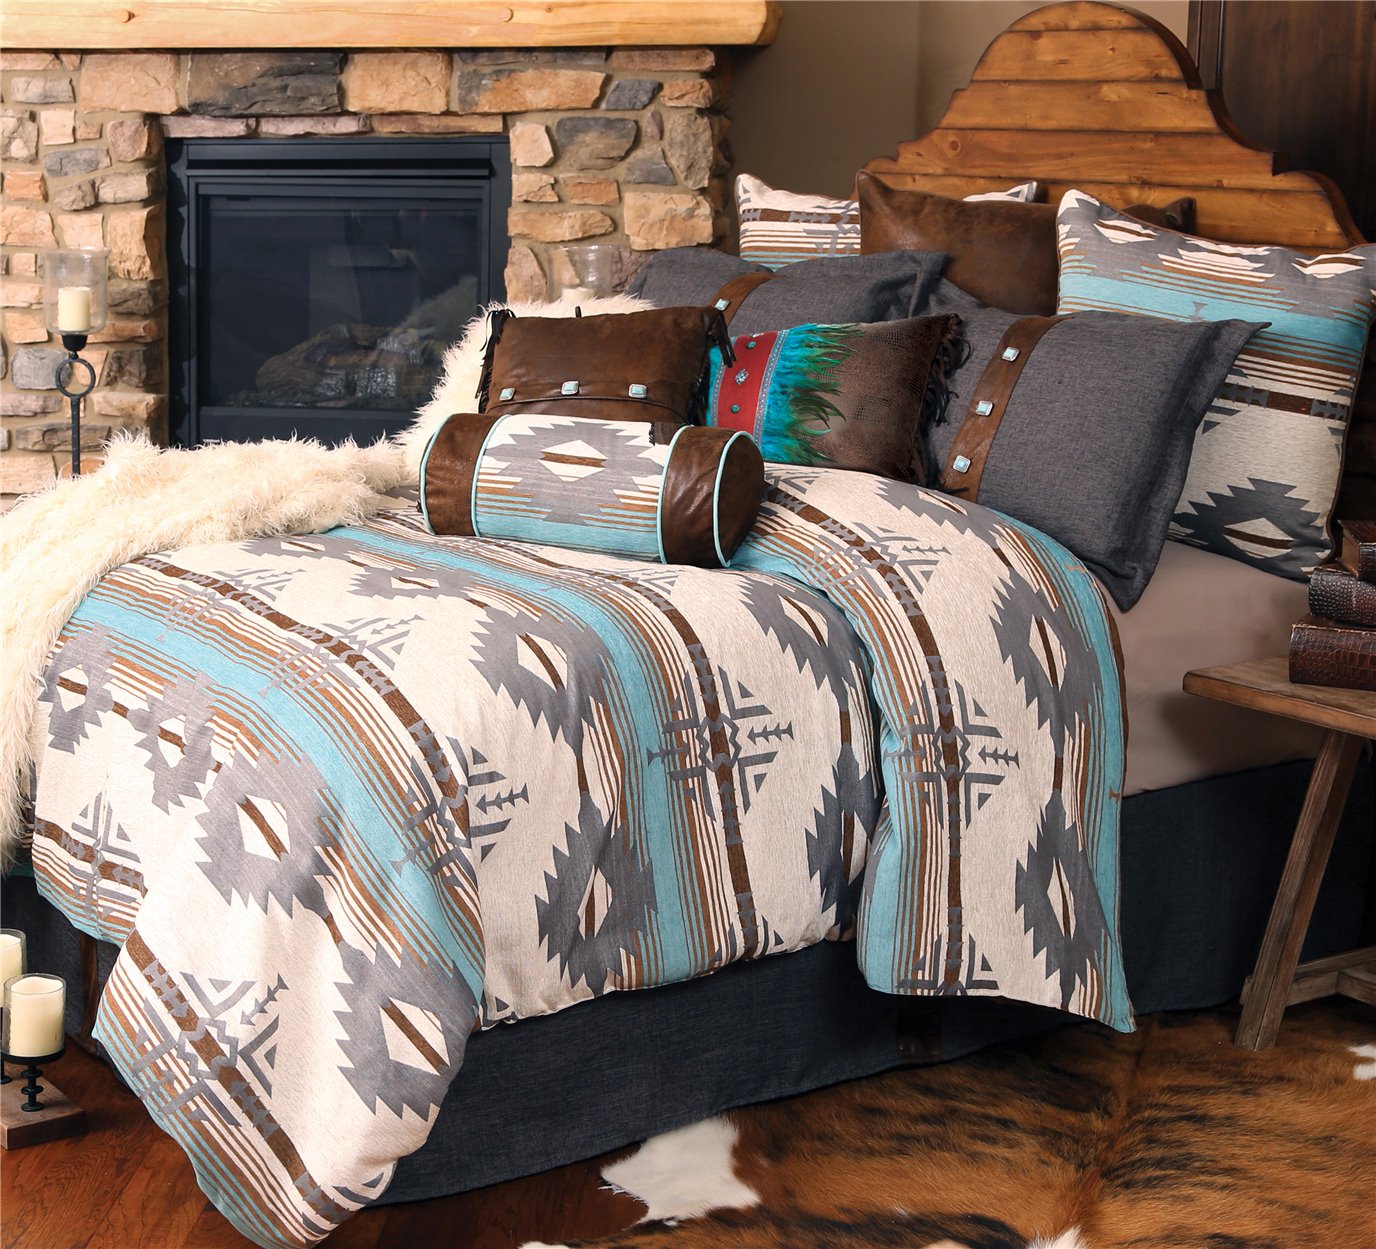 Carstens Badlands Southwestern 4-Piece Comforter Set, Twin